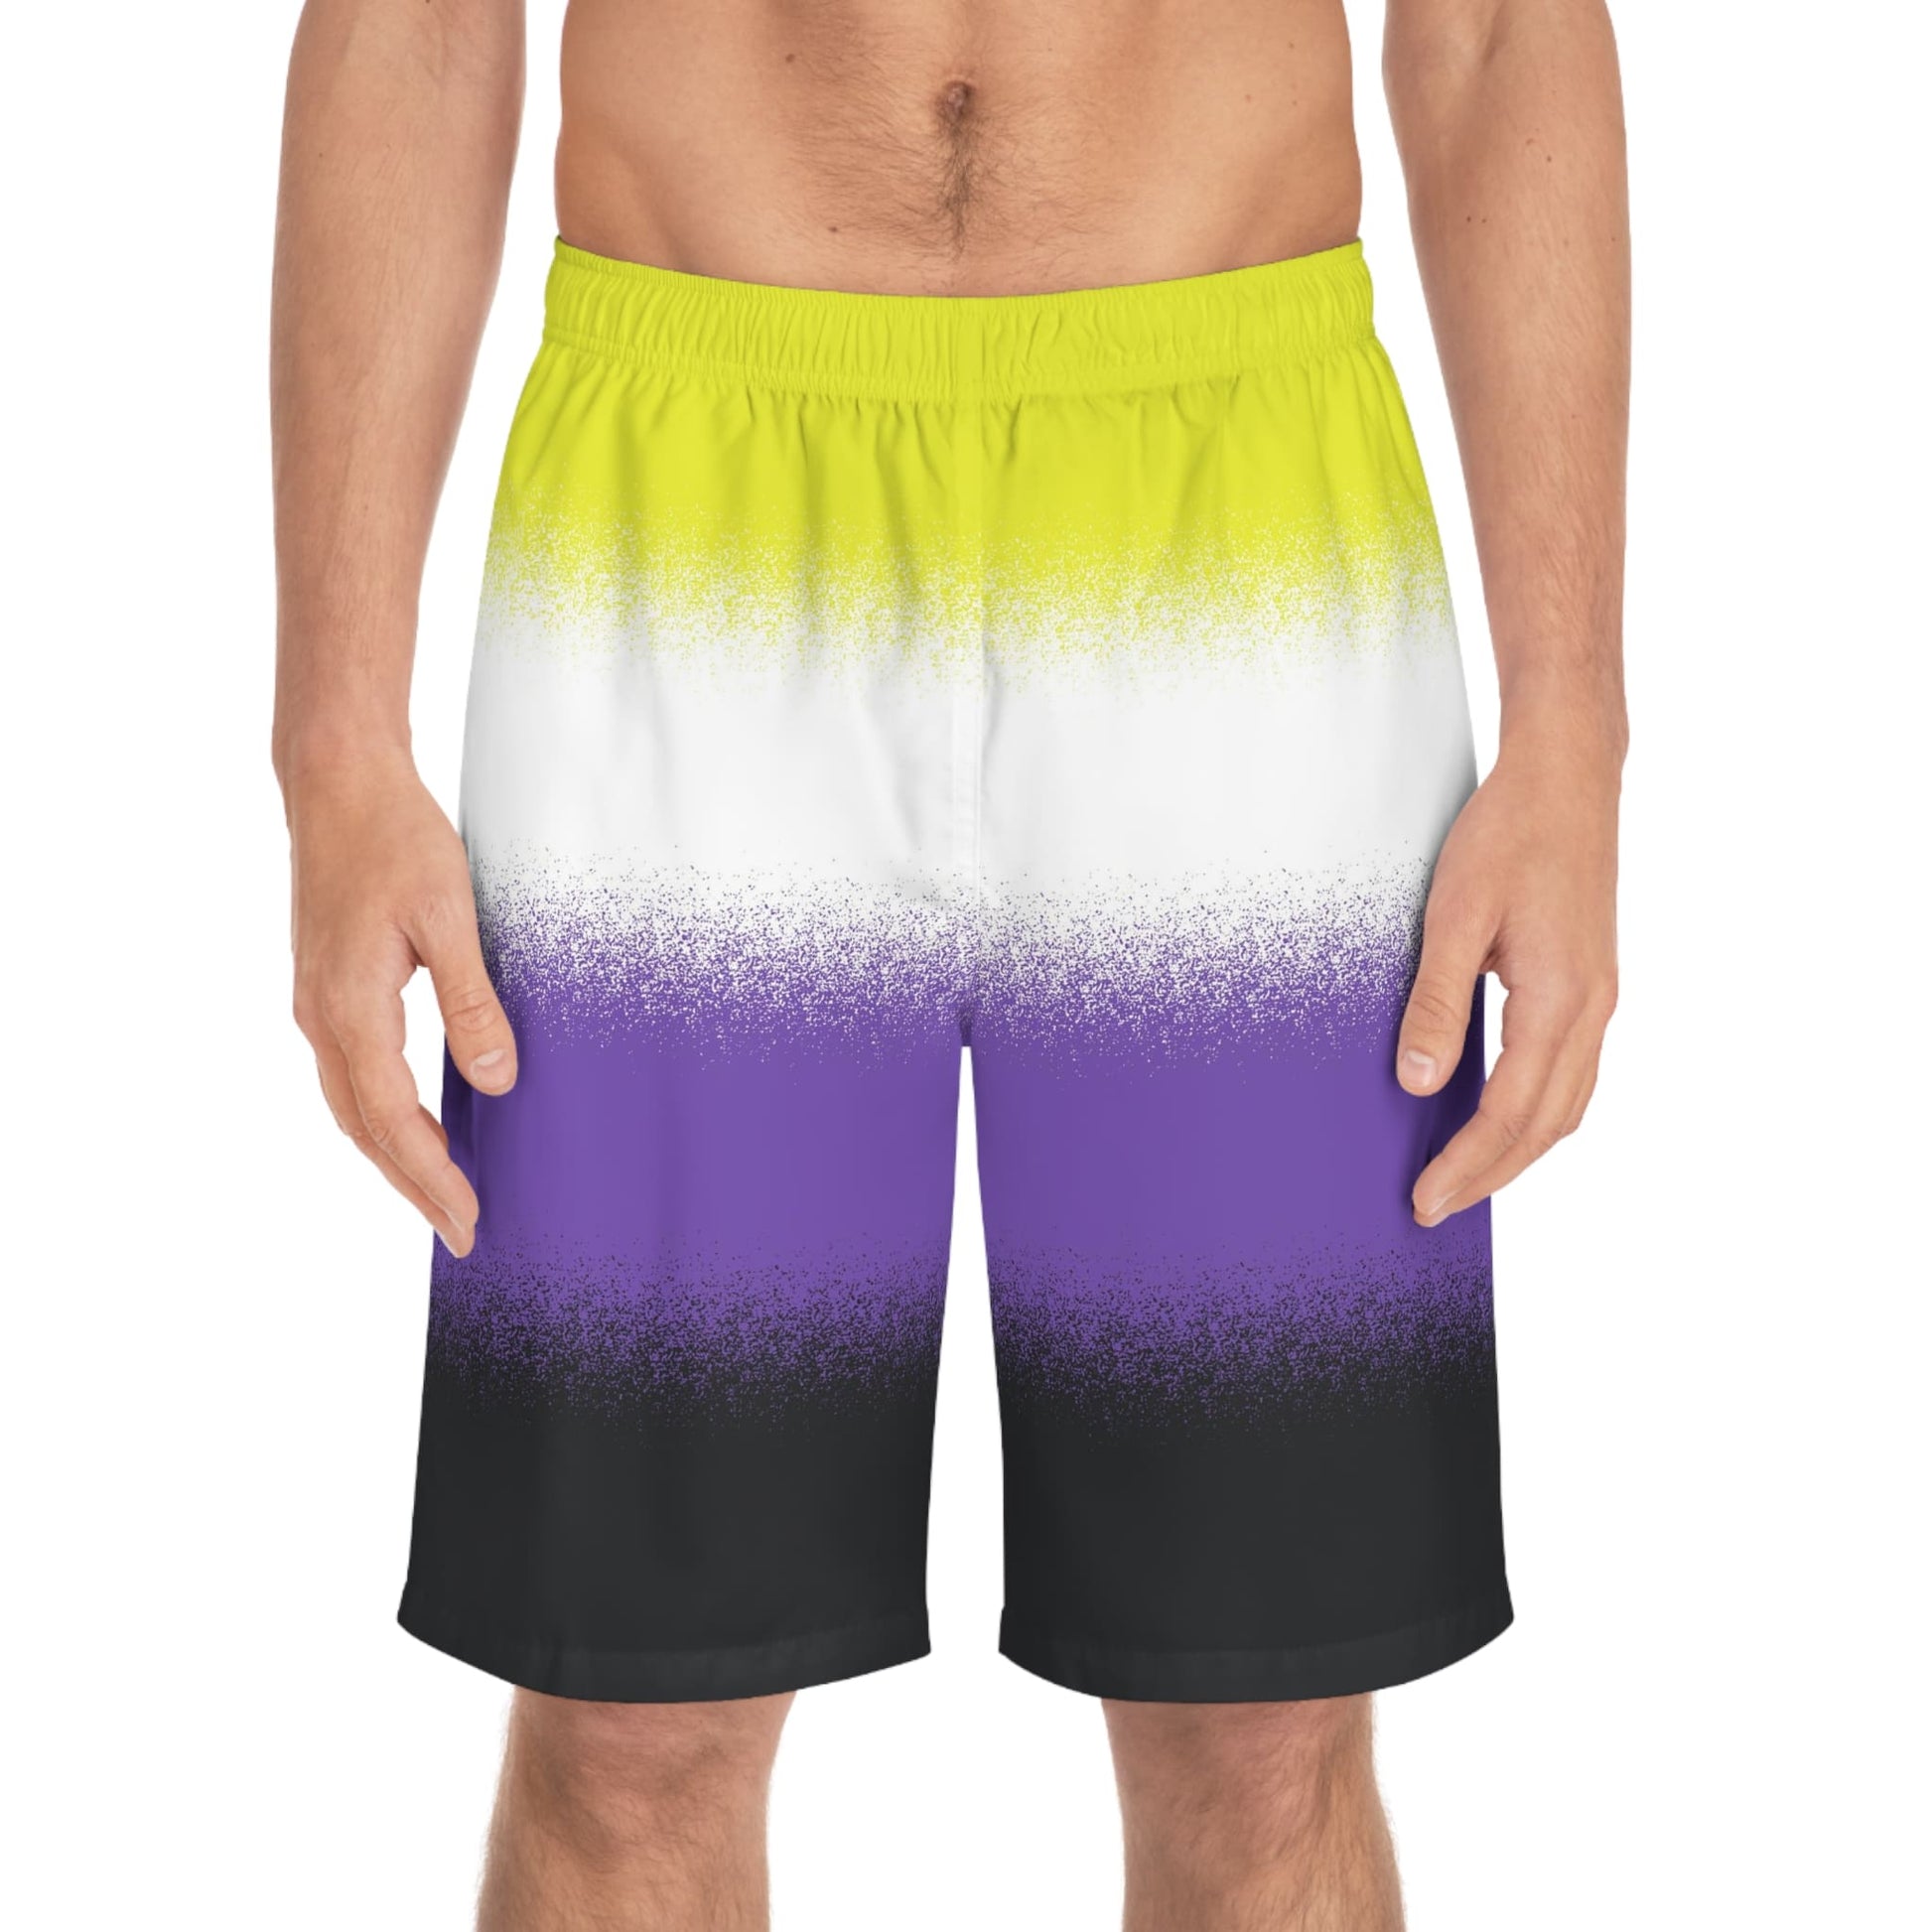 nonbinary swim shorts, front